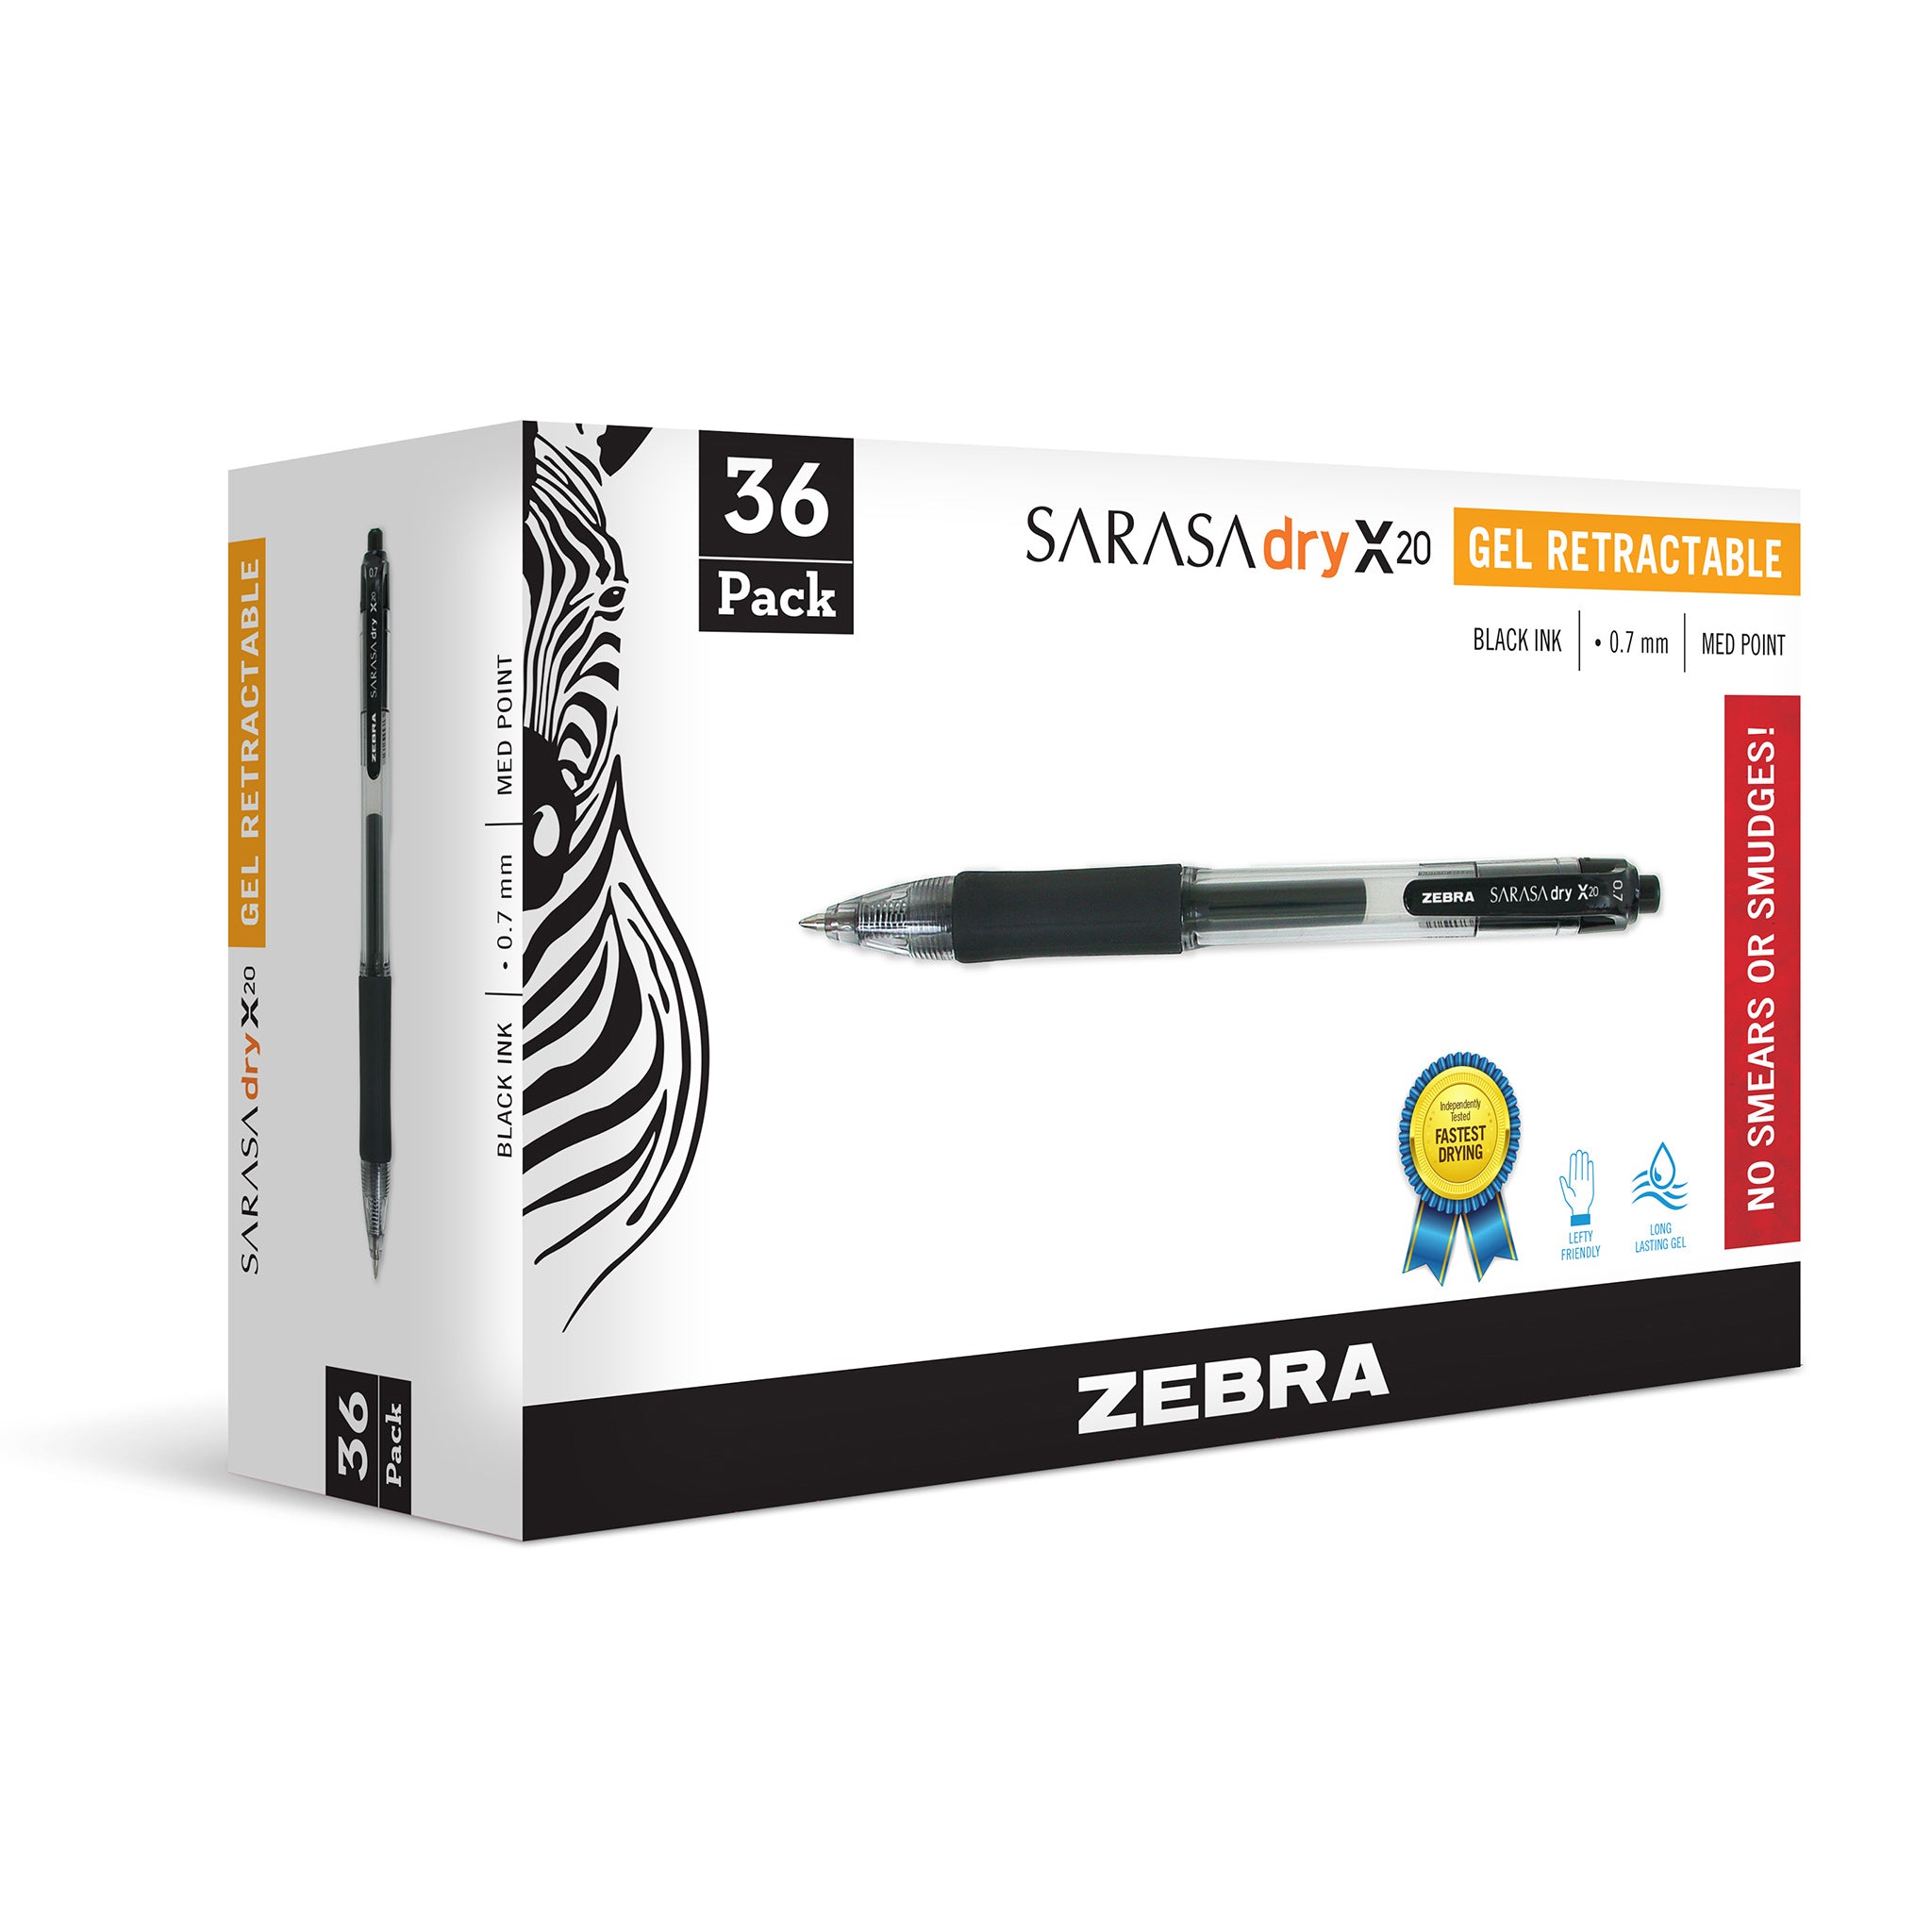 Zebra Pen Rapid Dry Ink Wide-Barrel 12/DZ Blue 45620 